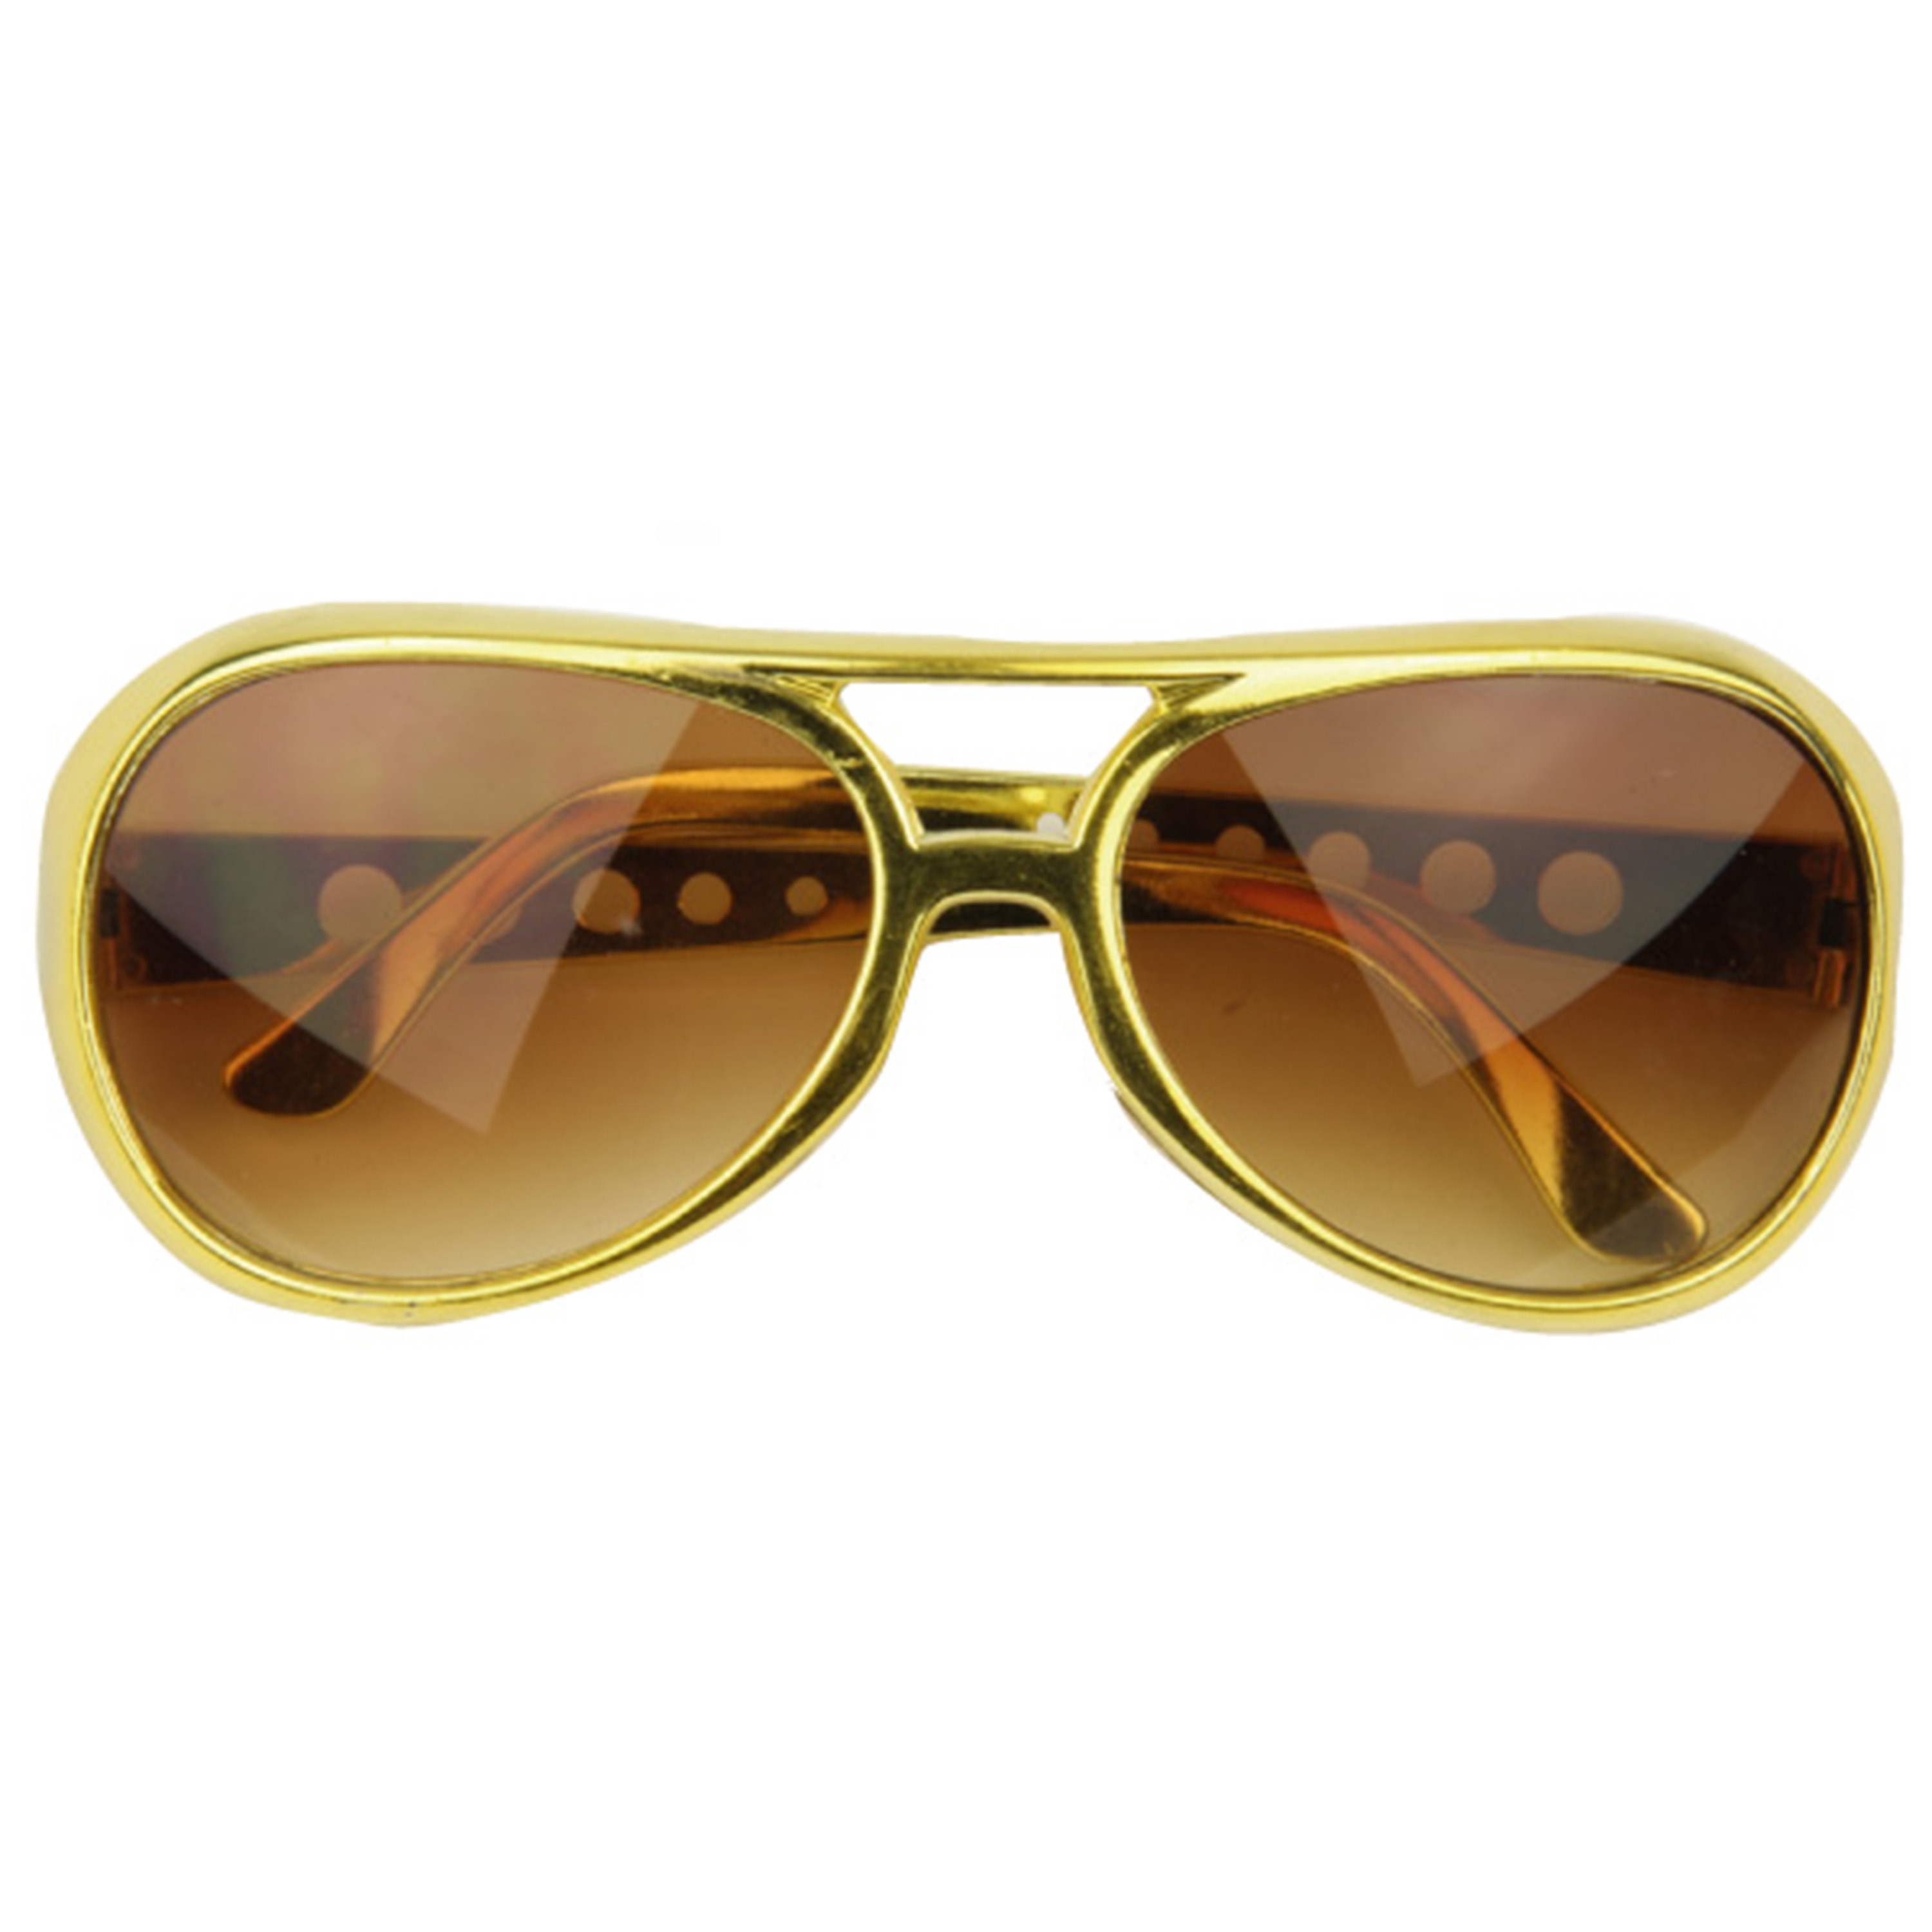 Elvis model verkleed zonnebril goud